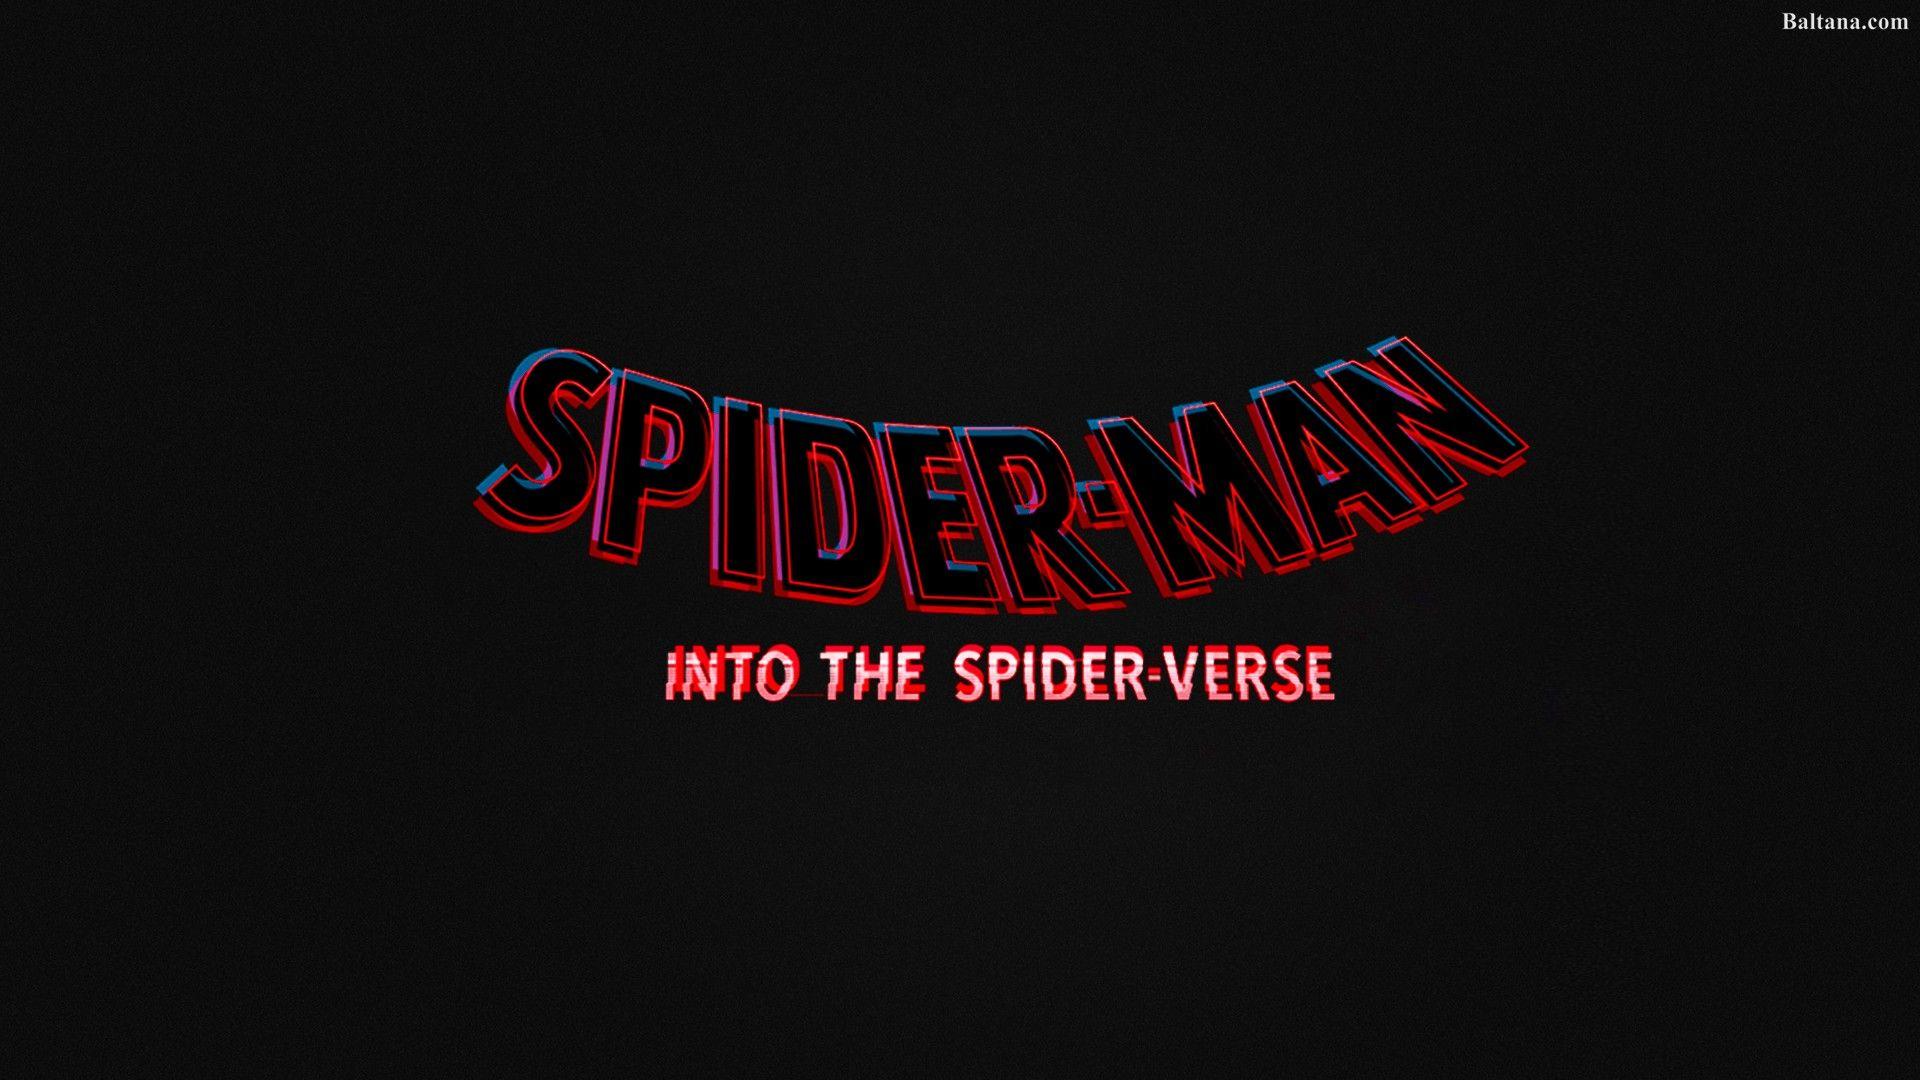 Spiderman Into The Spider Verse HD Desktop Wallpaper 29946